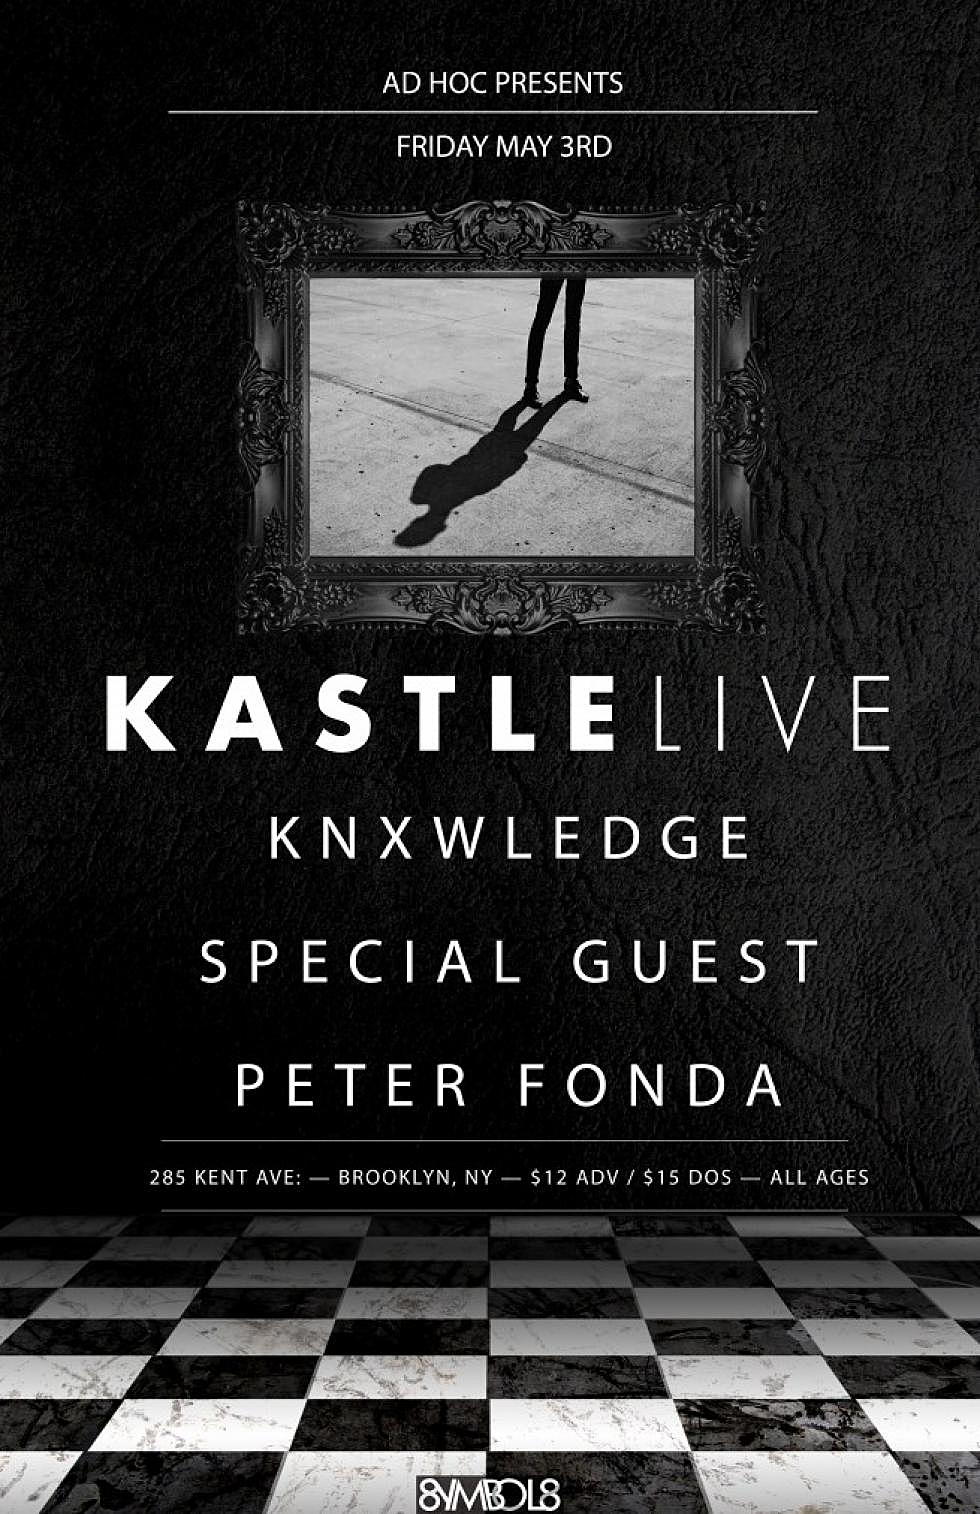 Kastle to make NYC debut 5/3 + Remix of Ellie Goulding&#8217;s &#8220;My Blood&#8221;